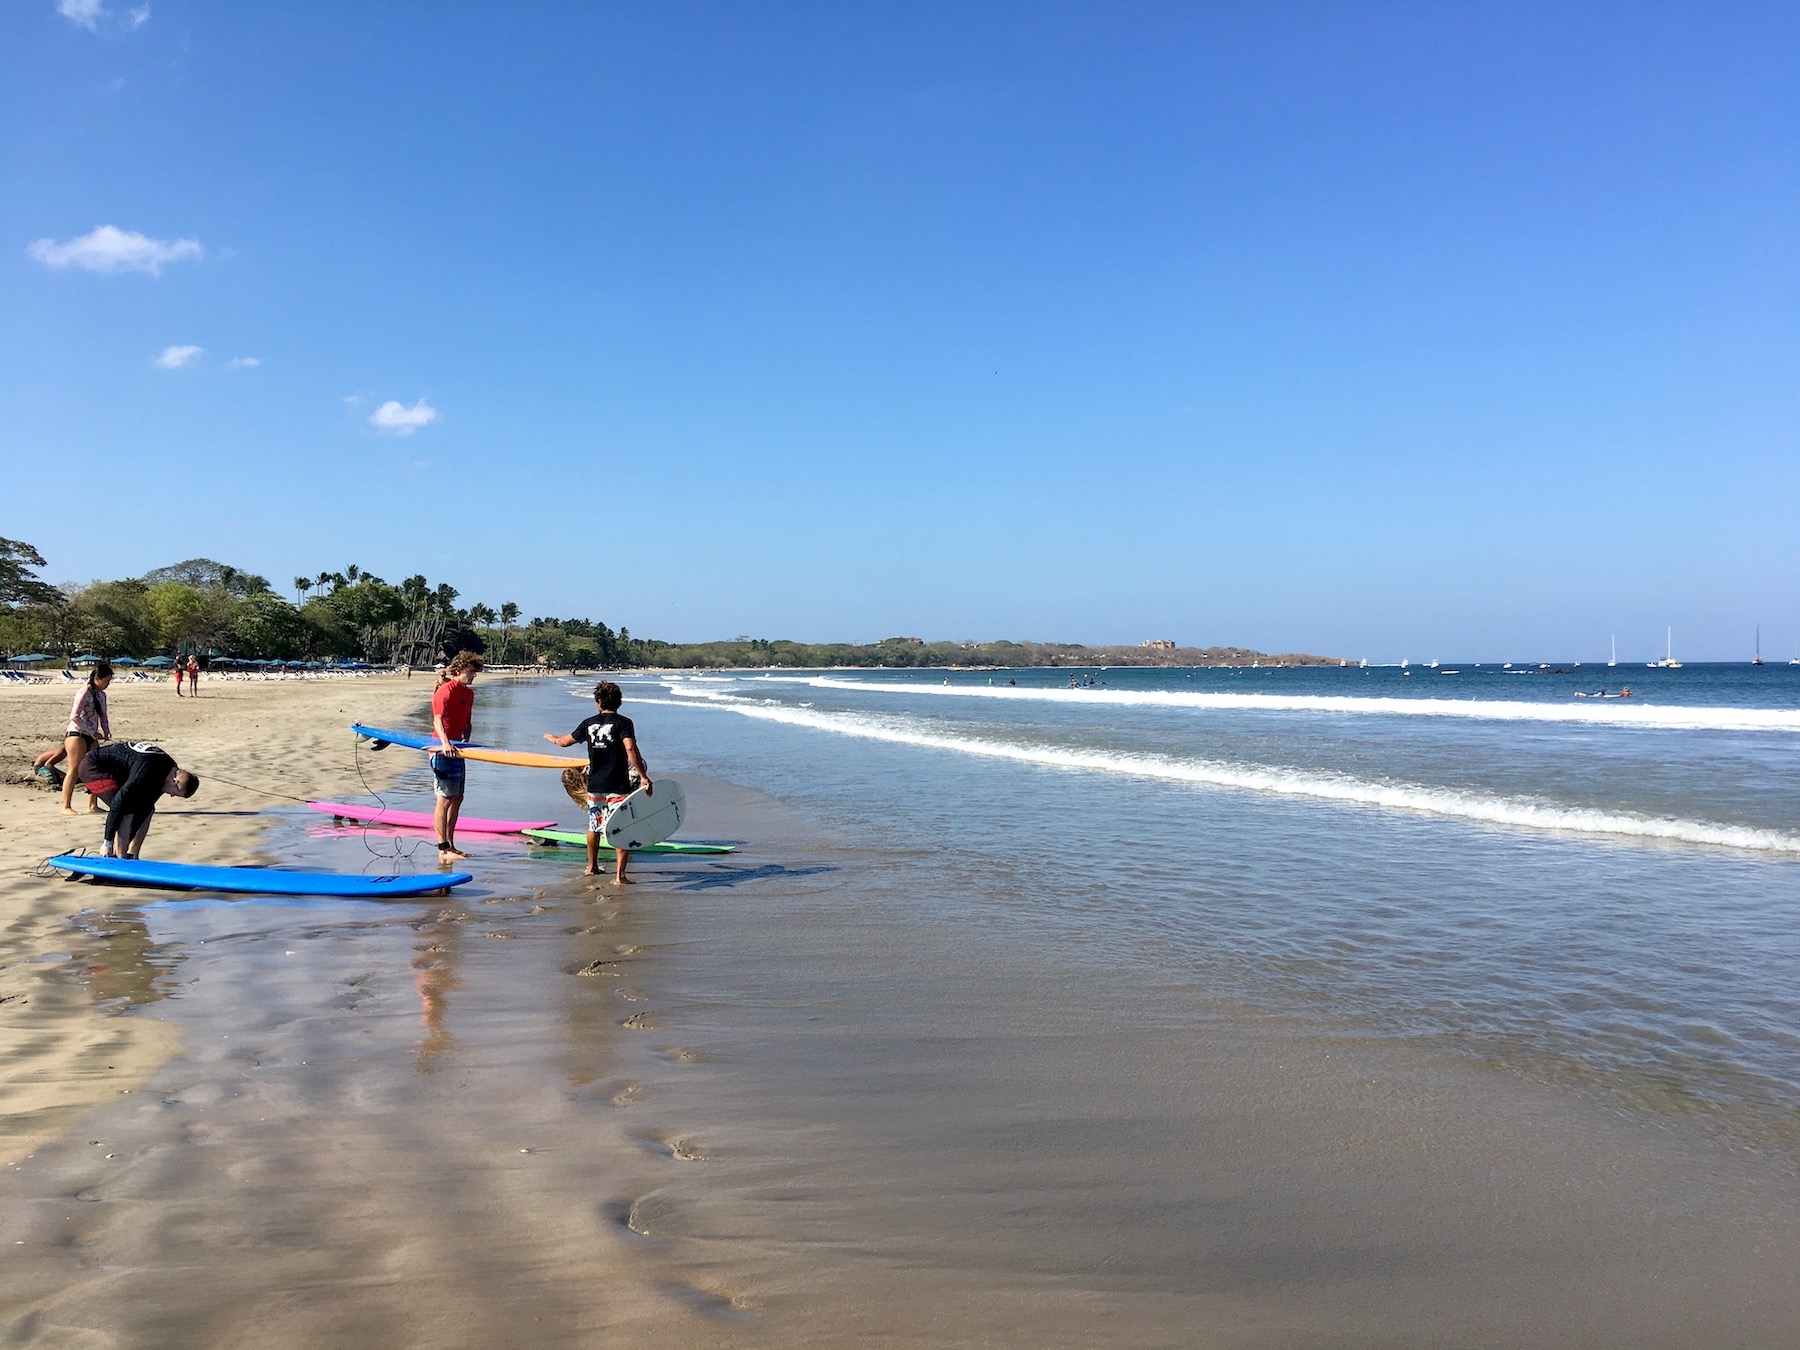 Tamarindo Beach - great for surfing beginners